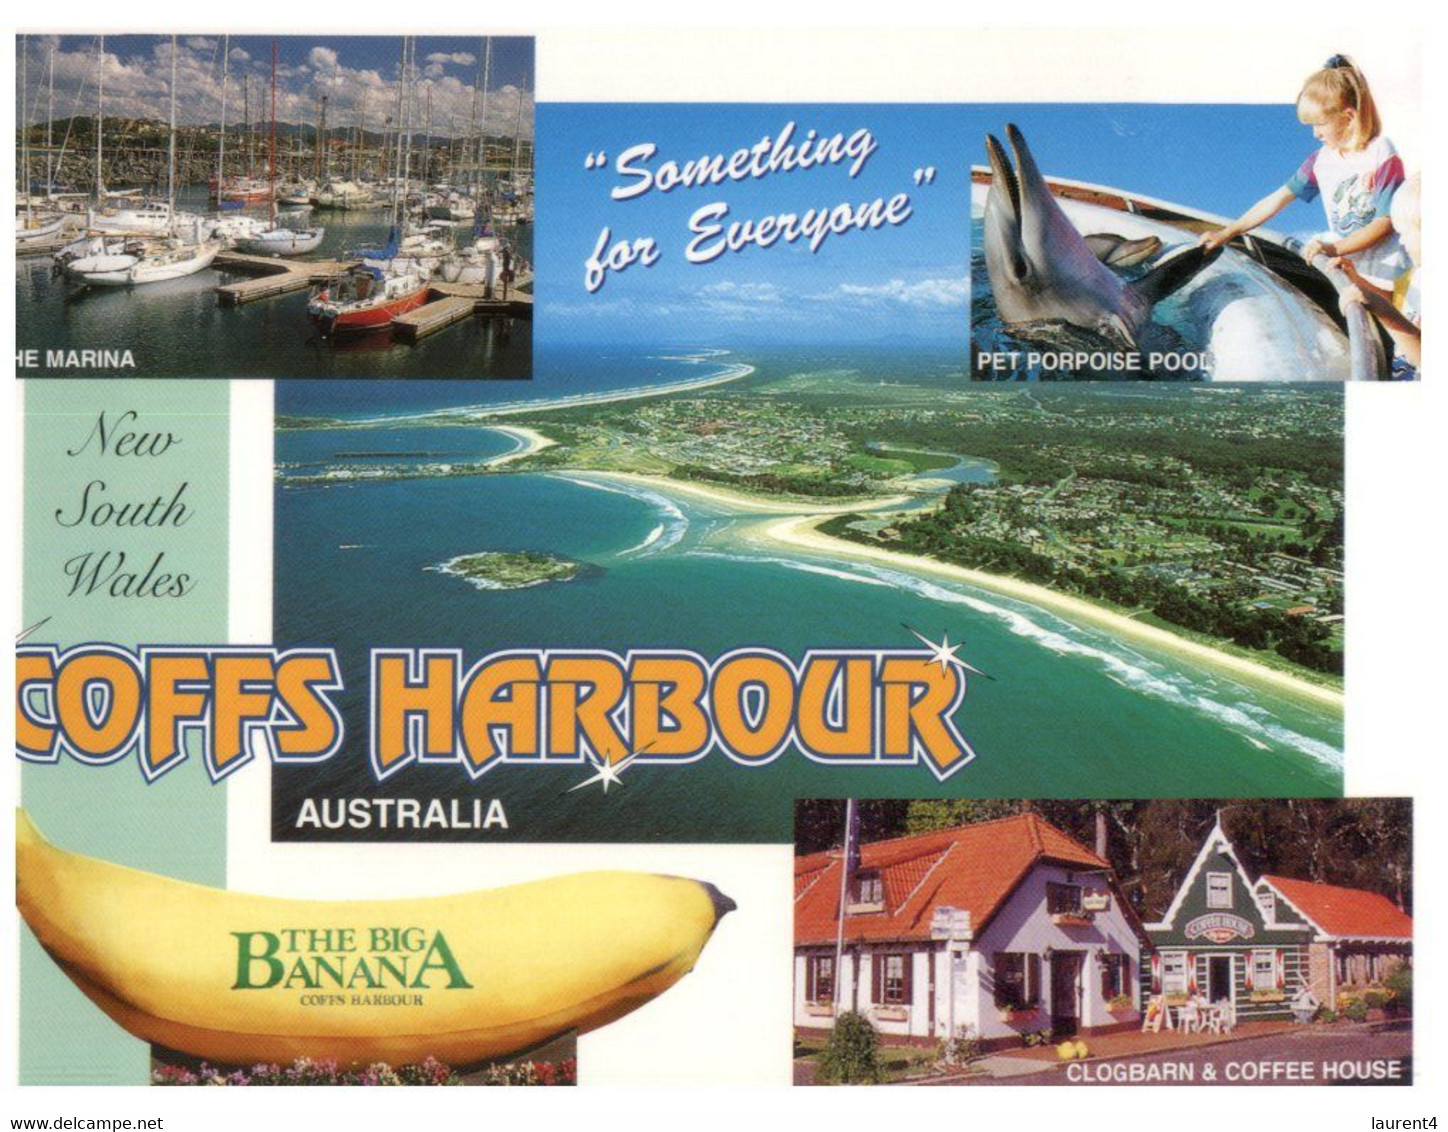 (II [ii]33) (ep) Australia - NSW - Coffs Harbour (with Big Banana) (CH57) - Coffs Harbour